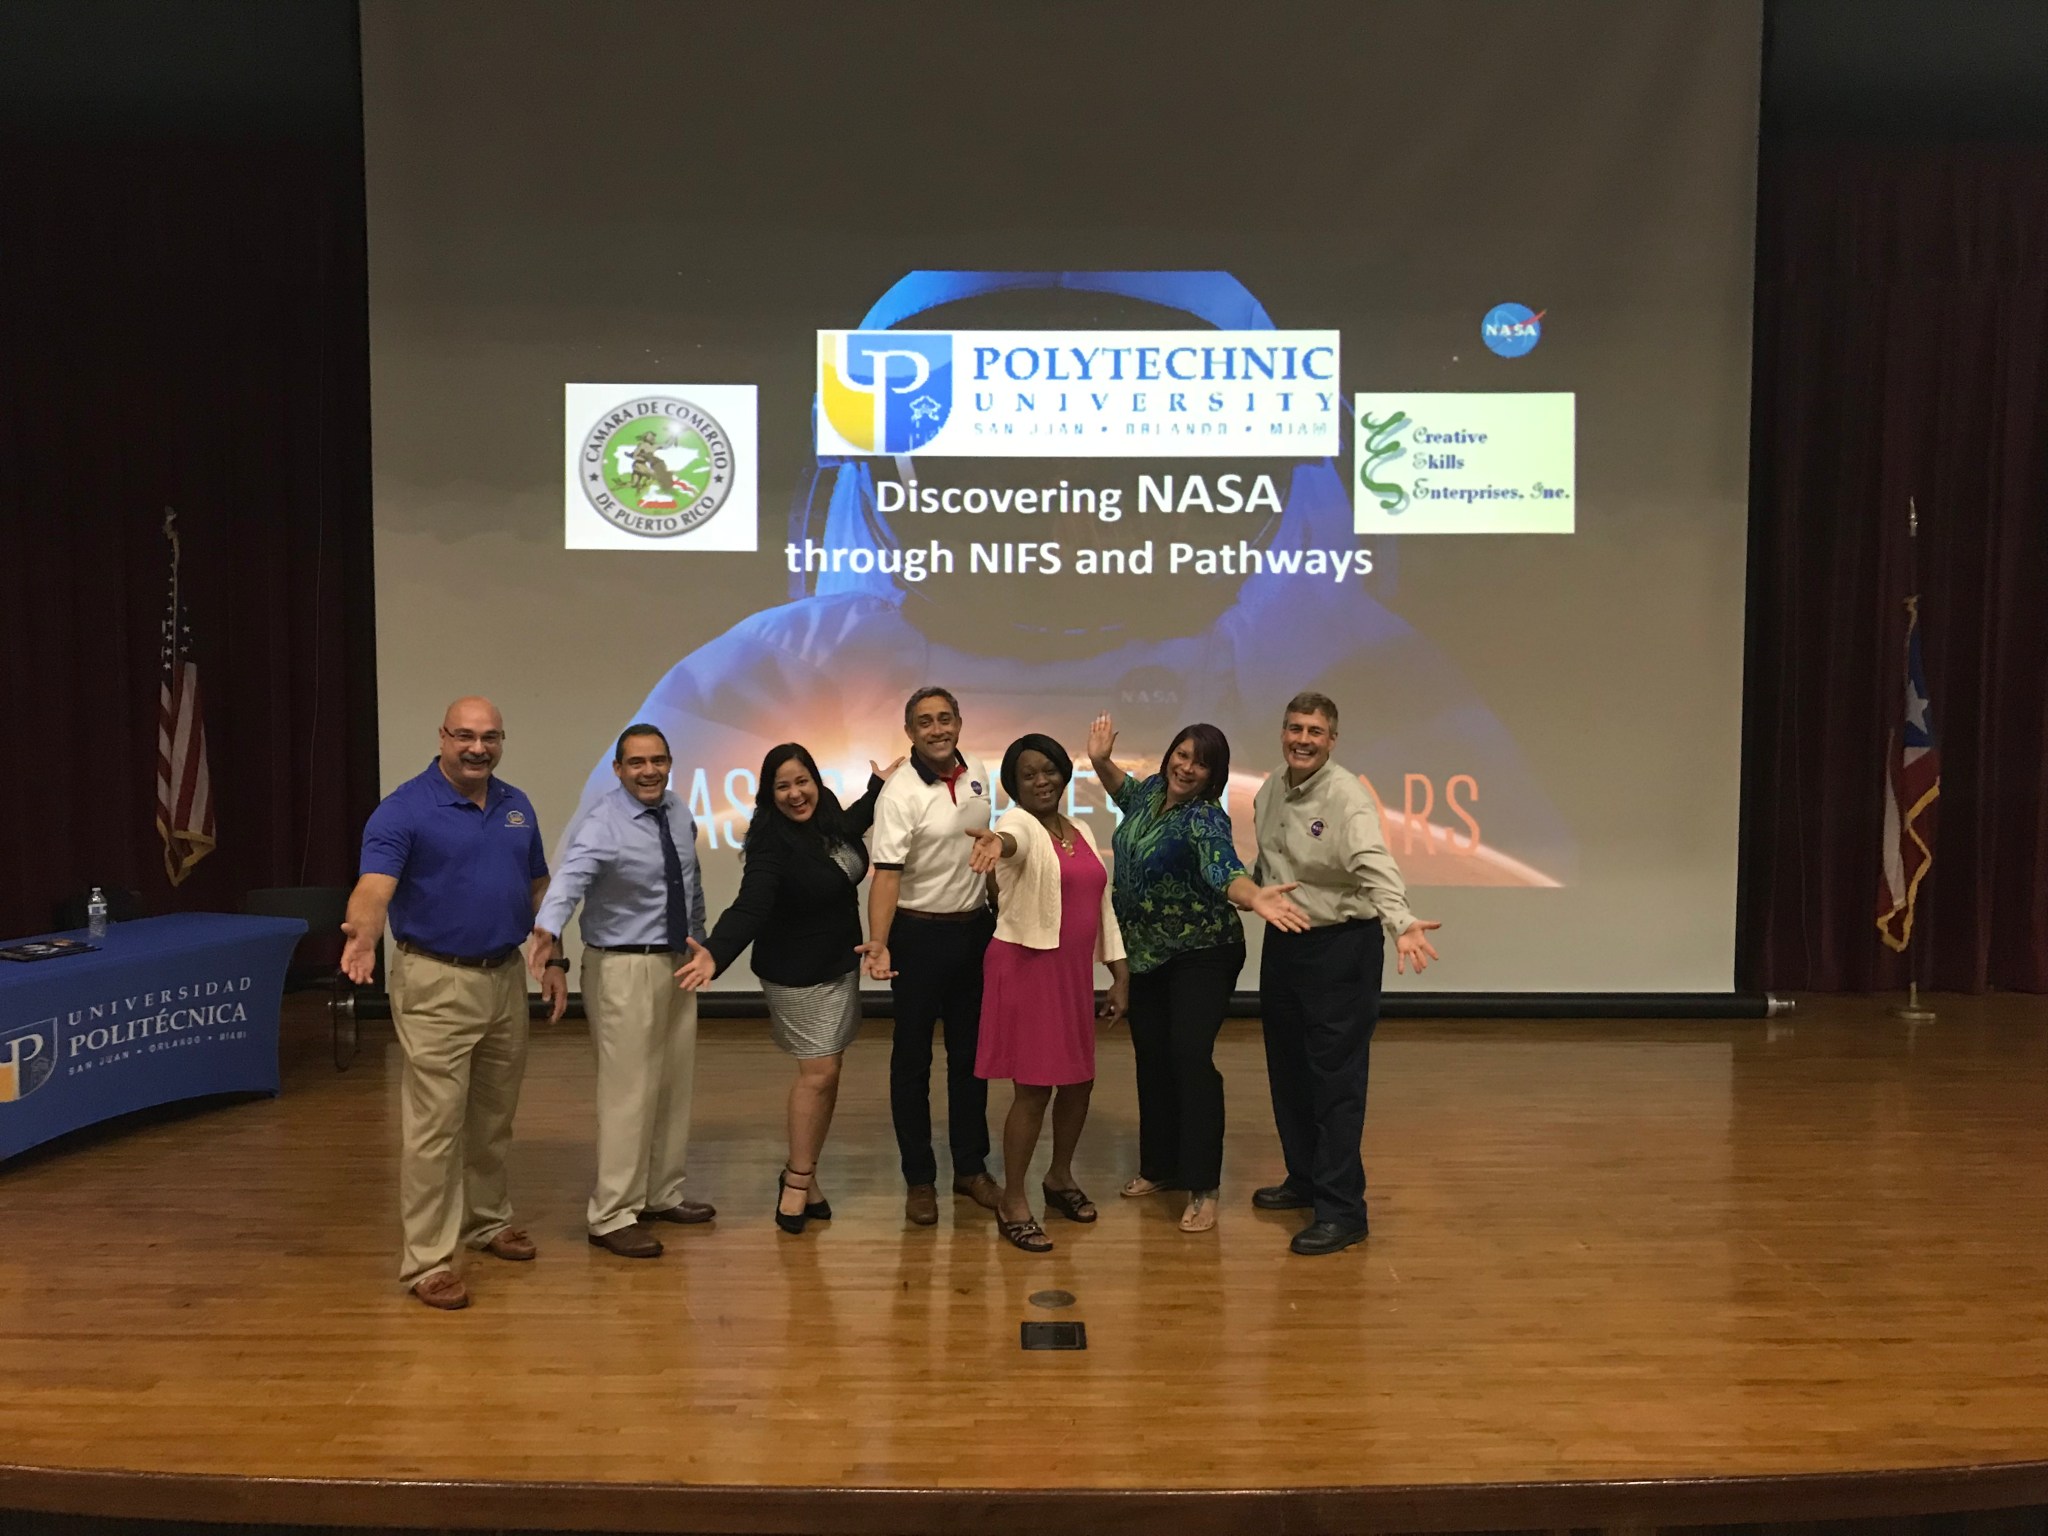 Kennedy Space Center employees spark interest in STEM, NASA